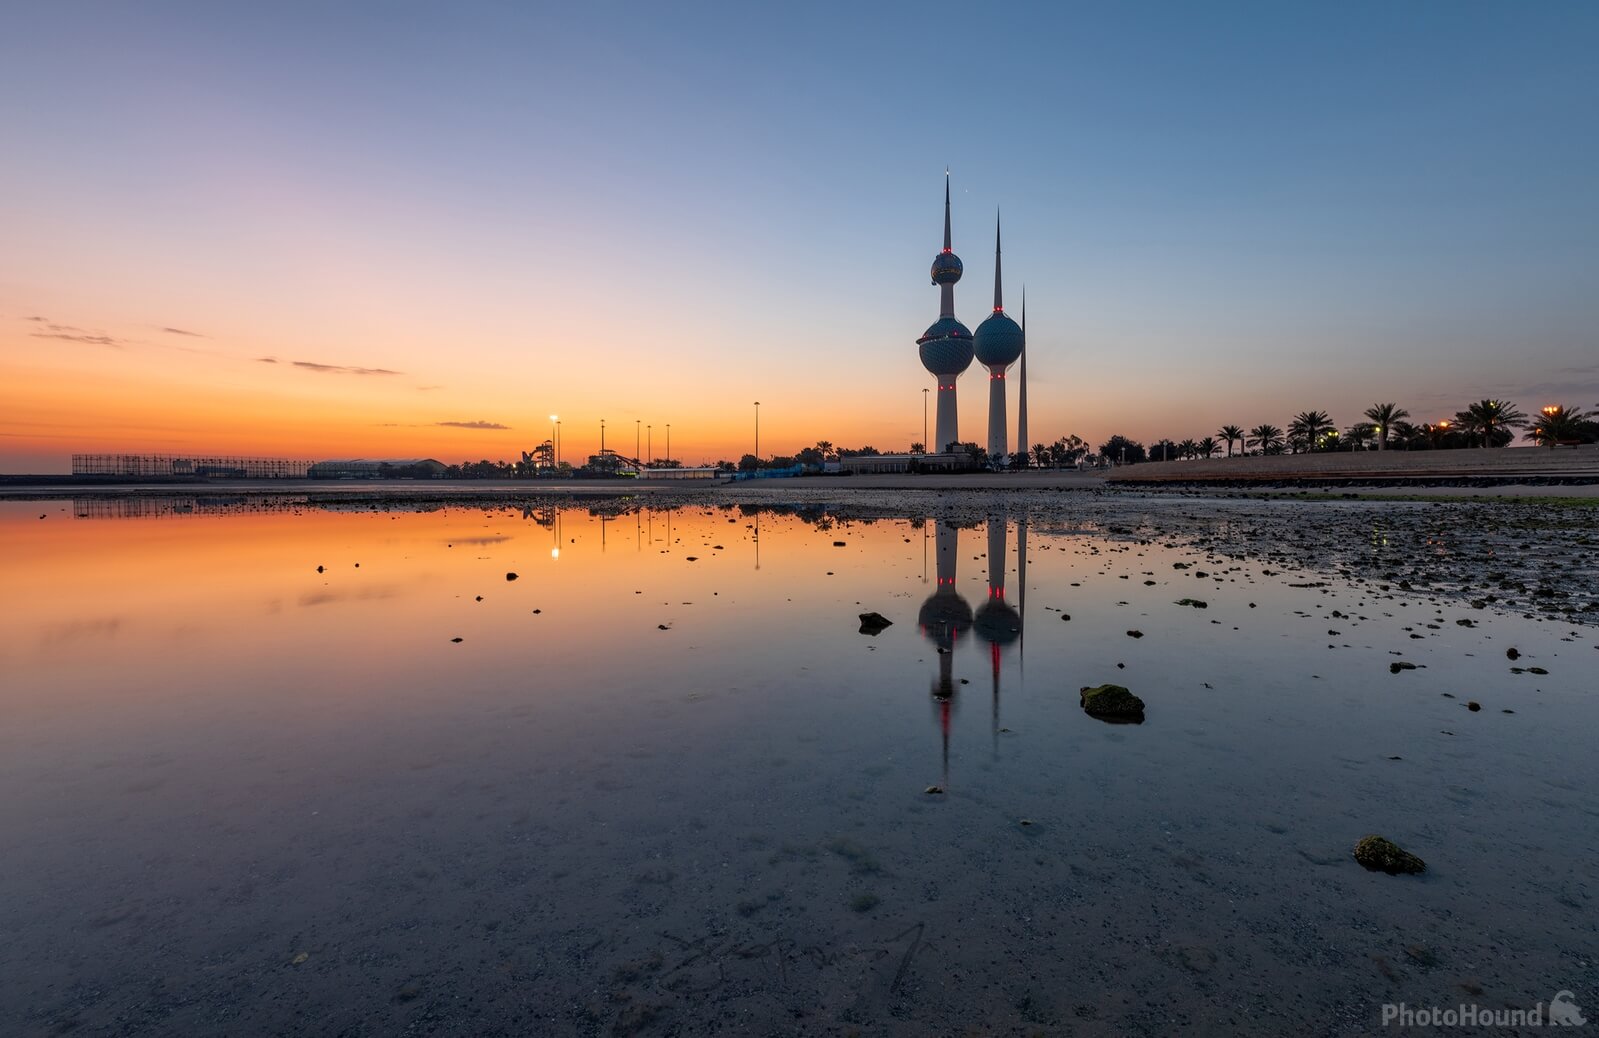 Kuwait photo locations